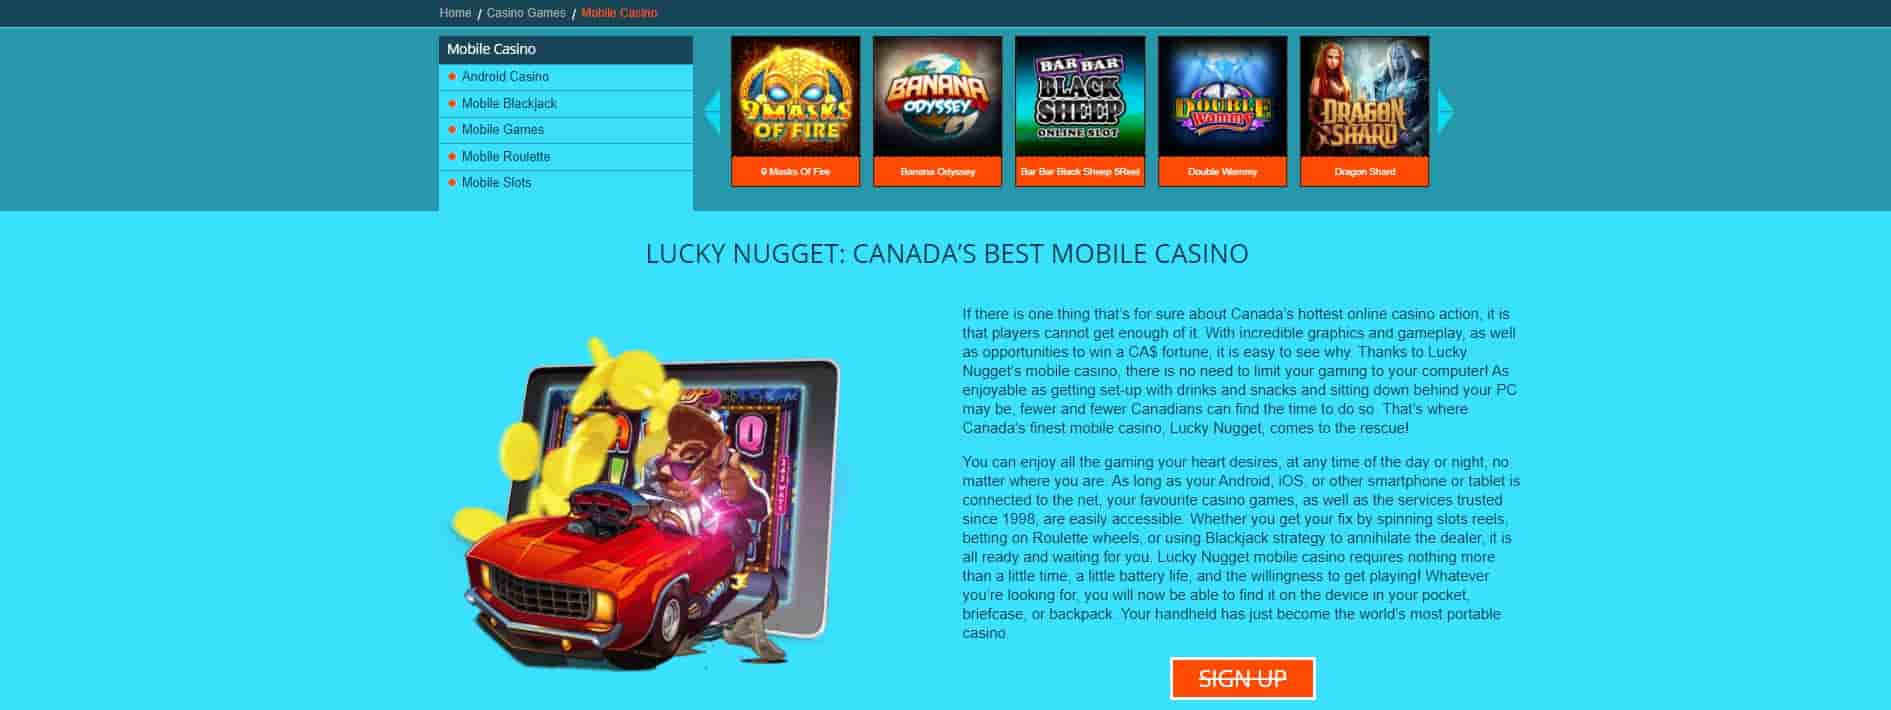 Lucky Nugget mobile casino